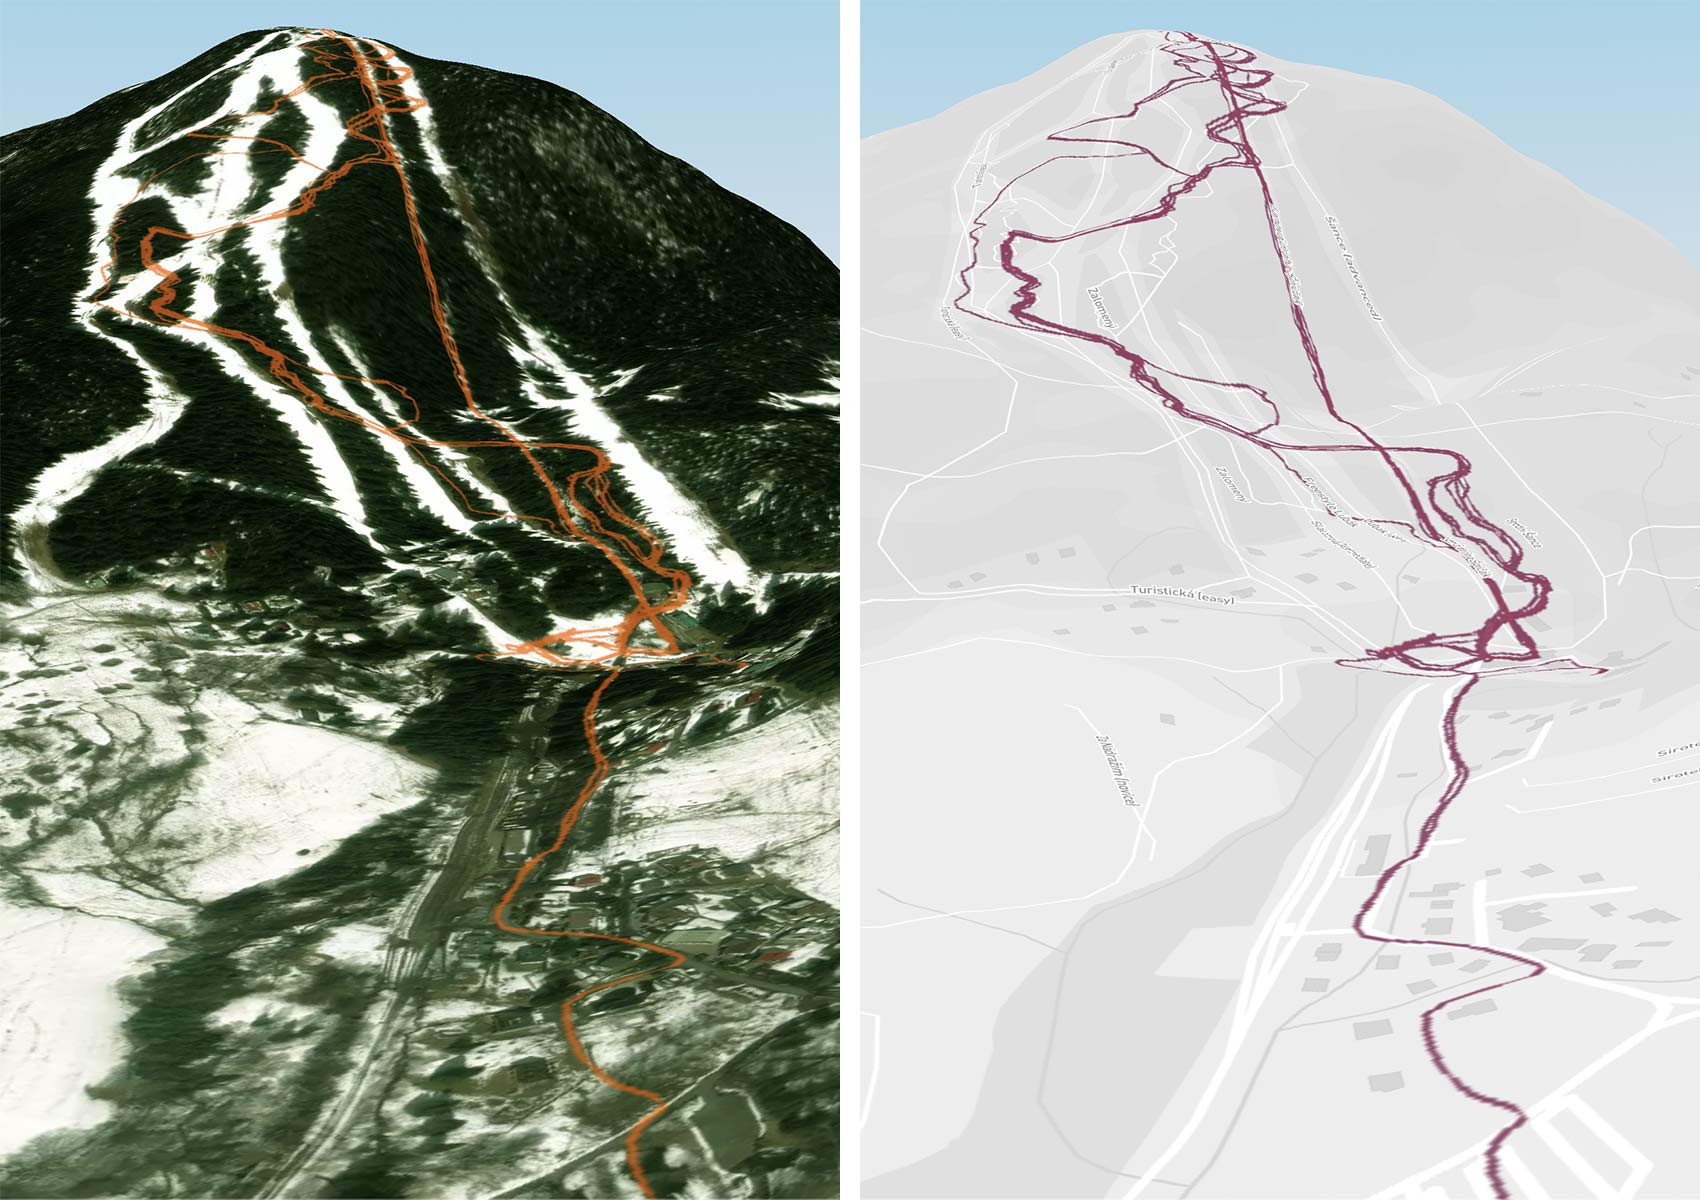 Strava 3D Heatmaps, strava premium subscription activity ride data 3D terrain map overlay, Spicak